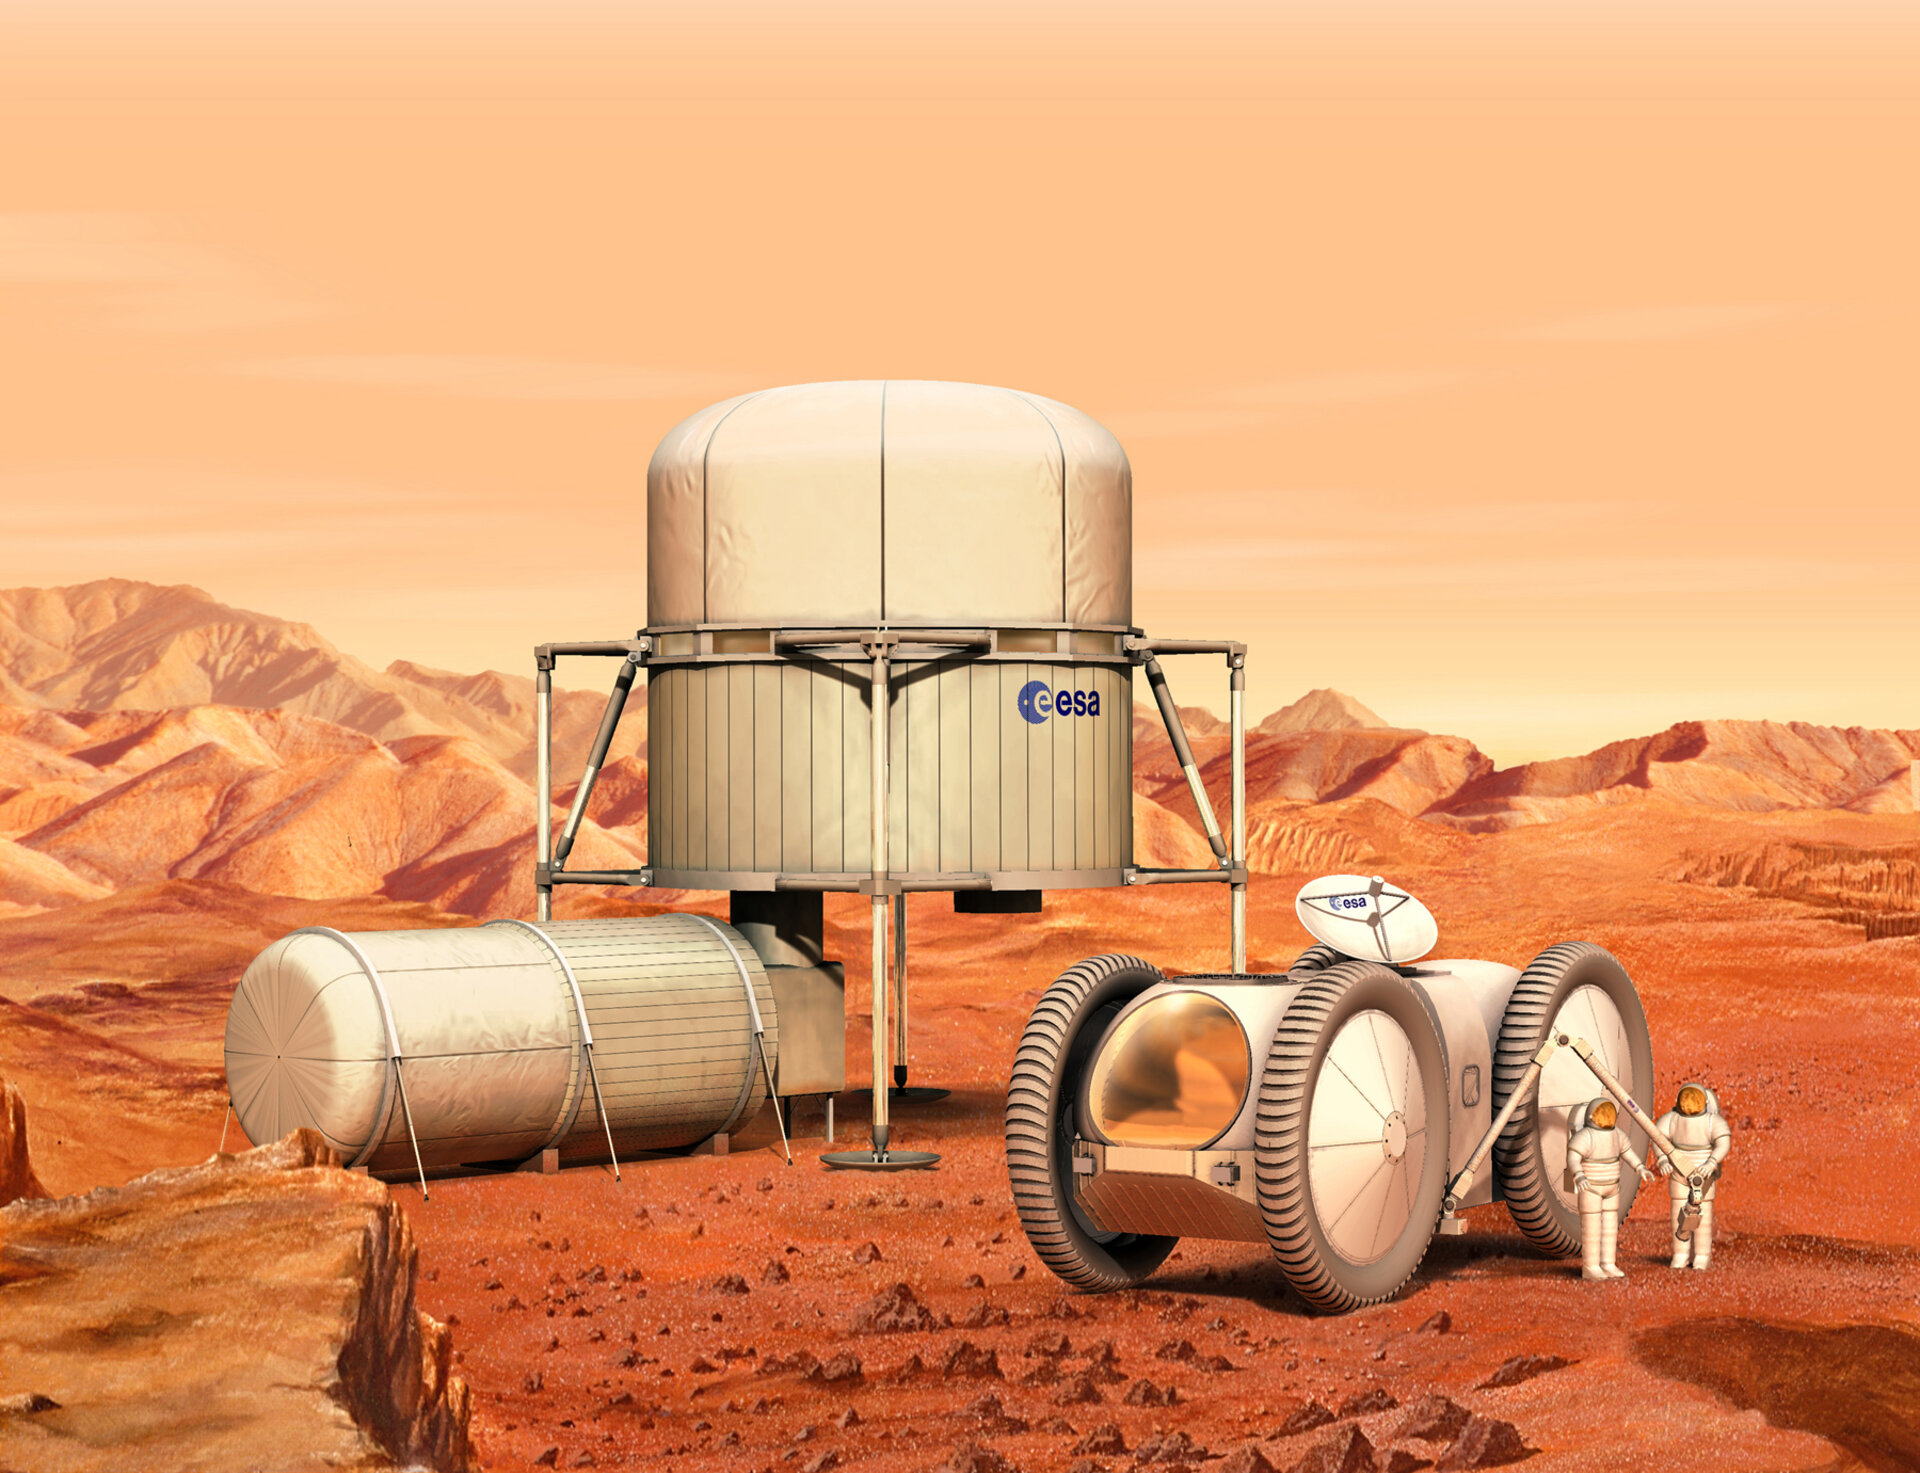 Artist's drawing of the Mars base habitat for crew